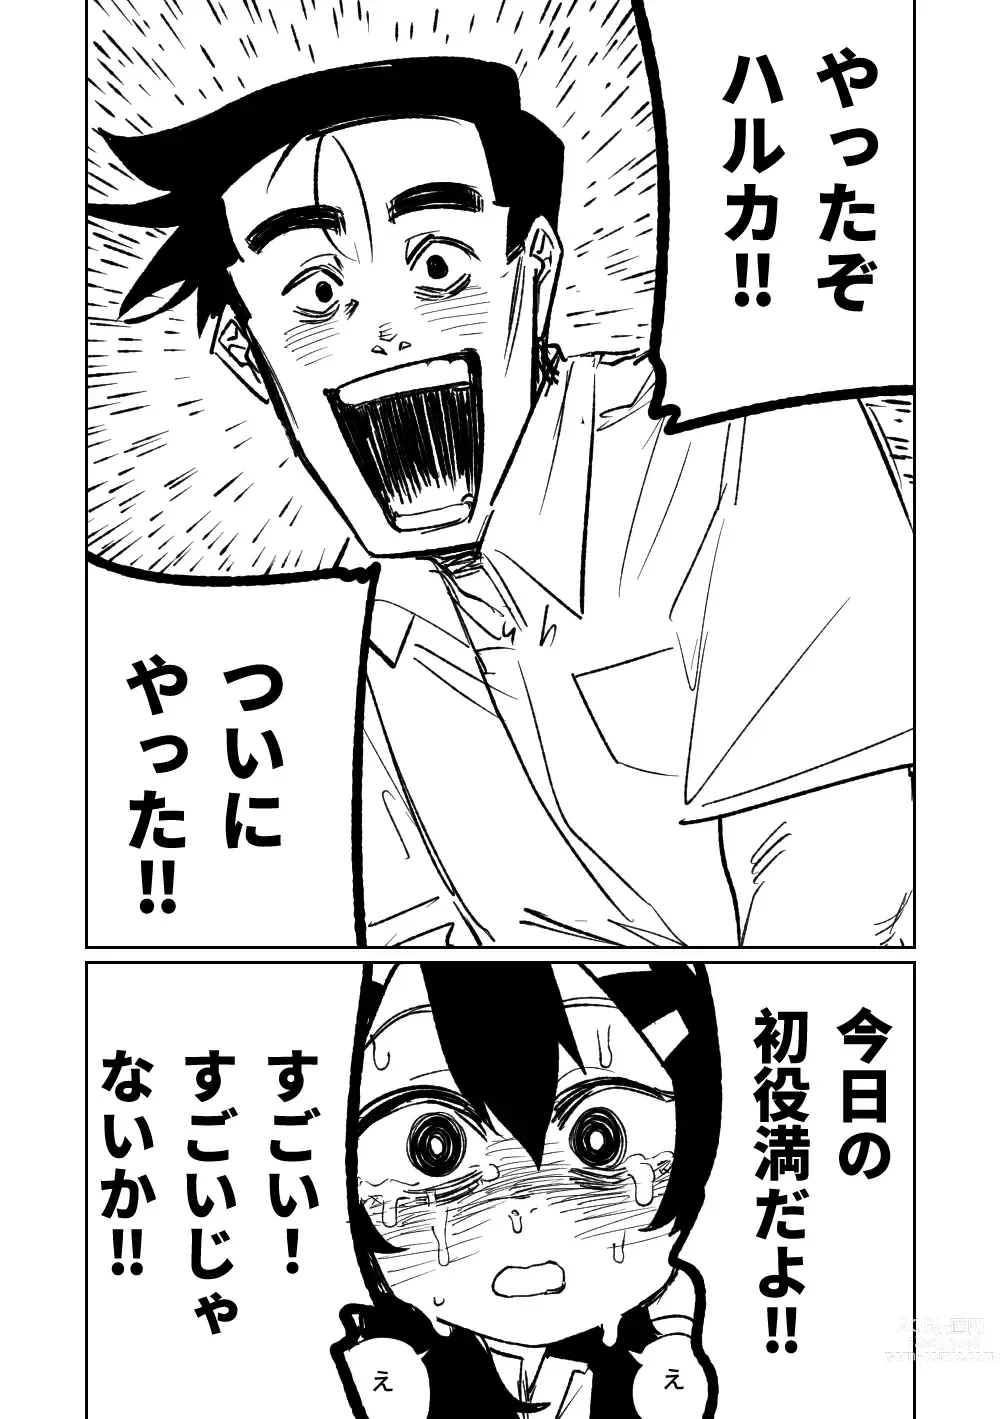 Page 195 of doujinshi Benriya 68 Datsui Mahjong Ichi ~Sankaisen~